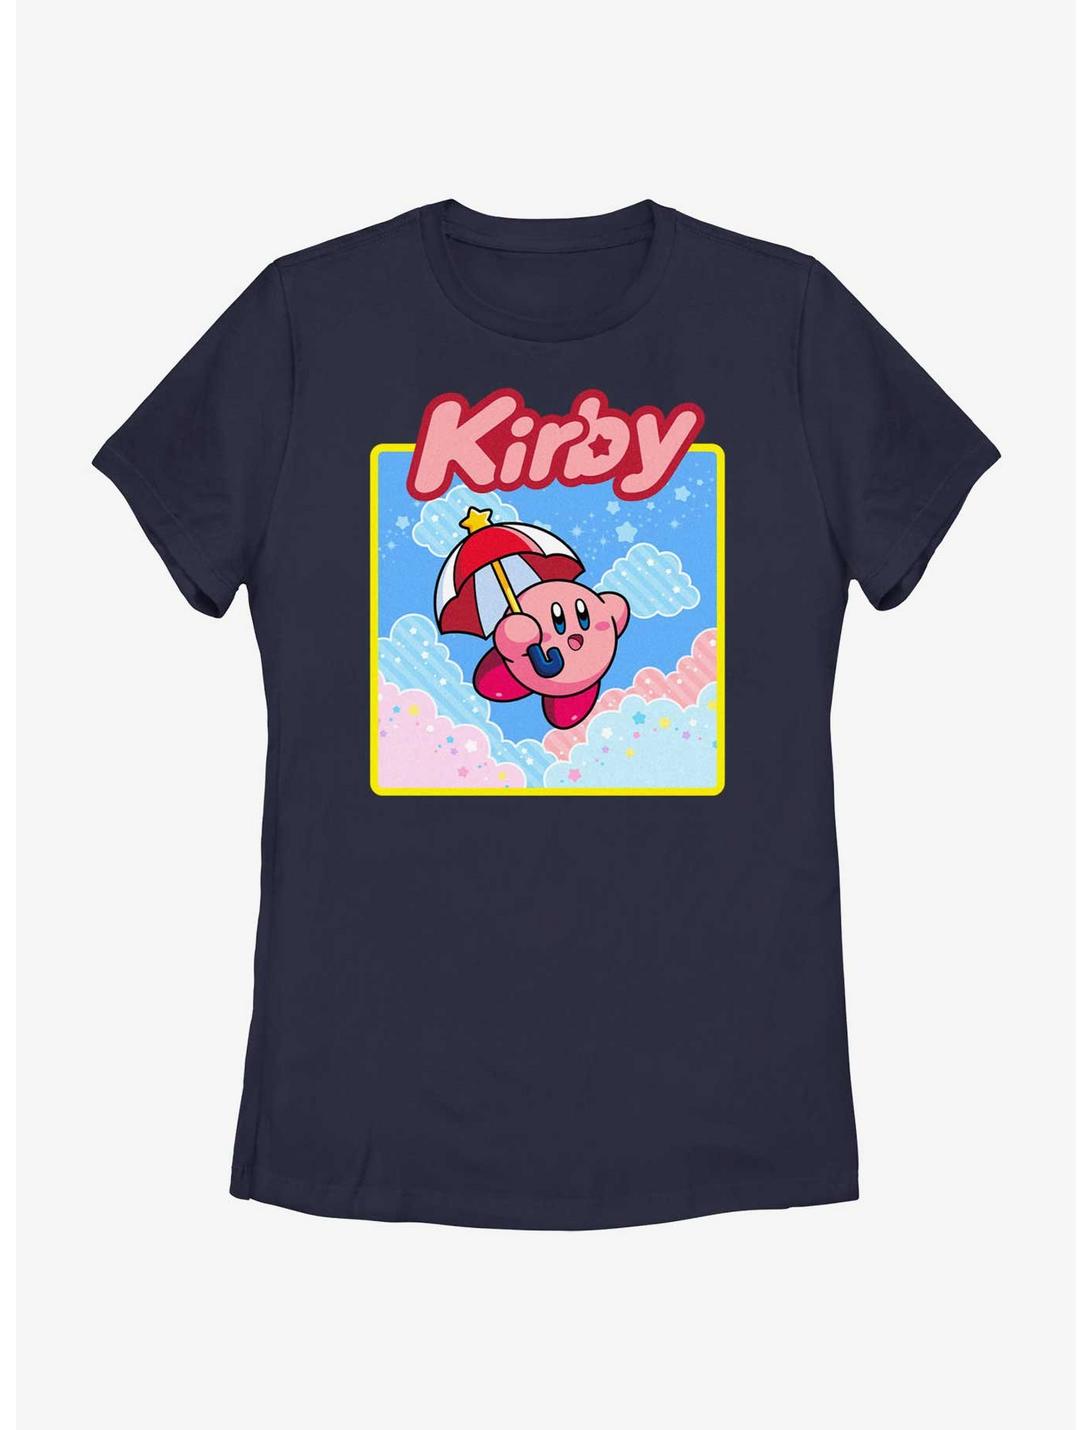 Kirby Starry Parasol Womens T-Shirt, NAVY, hi-res